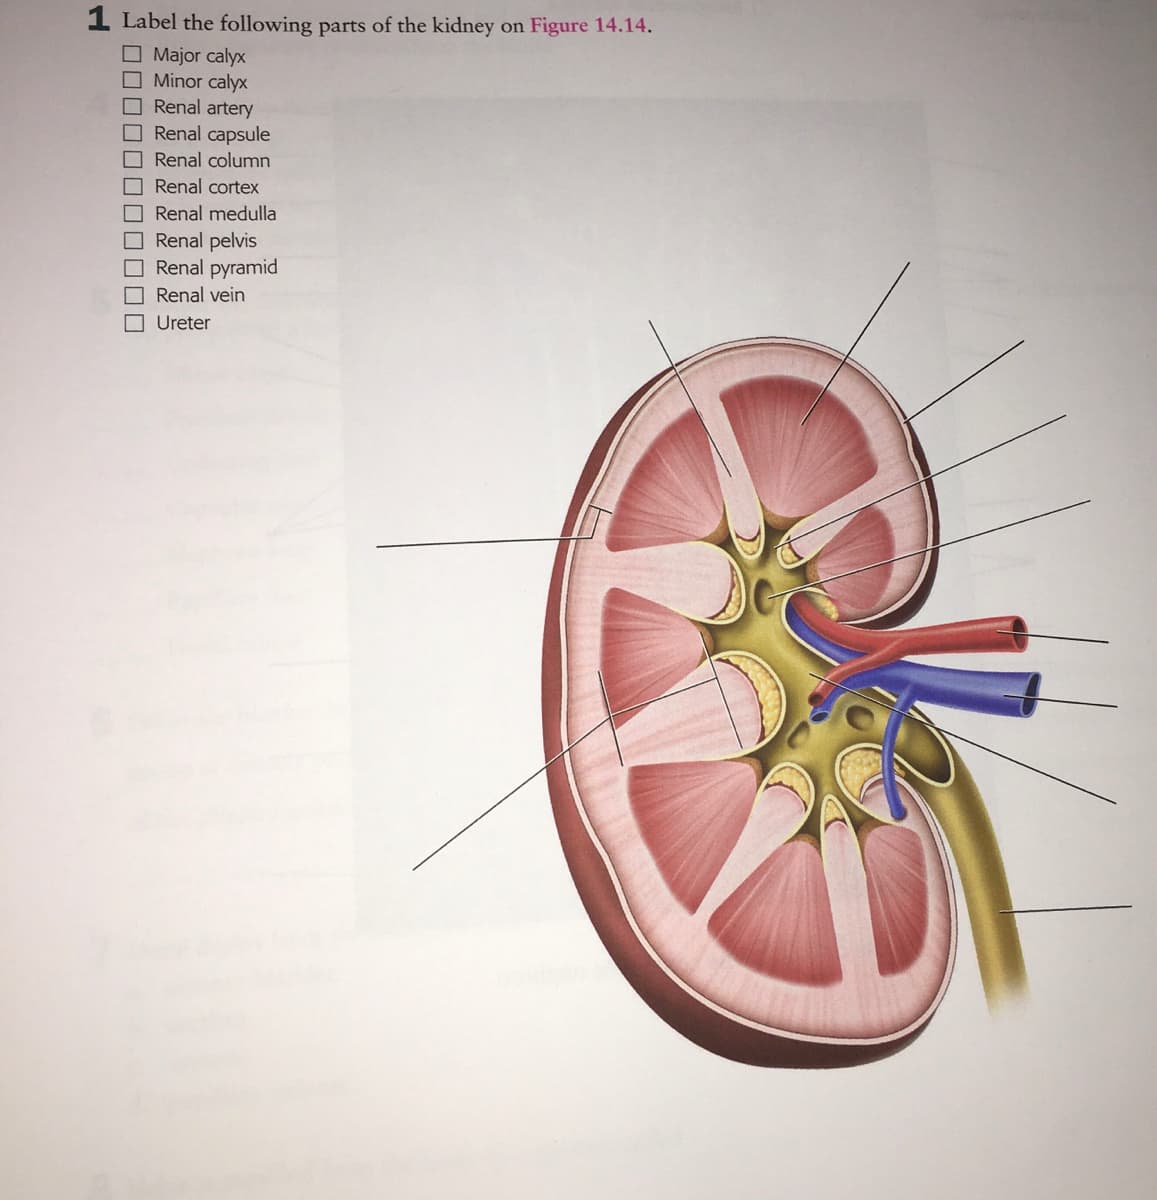 1 Label the following parts of the kidney on Figure 14.14.
O Major calyx
Minor calyx
ORenal artery
Renal capsule
Renal column
Renal cortex
Renal medulla
Renal pelvis
Renal pyramid
Renal vein
O Ureter
